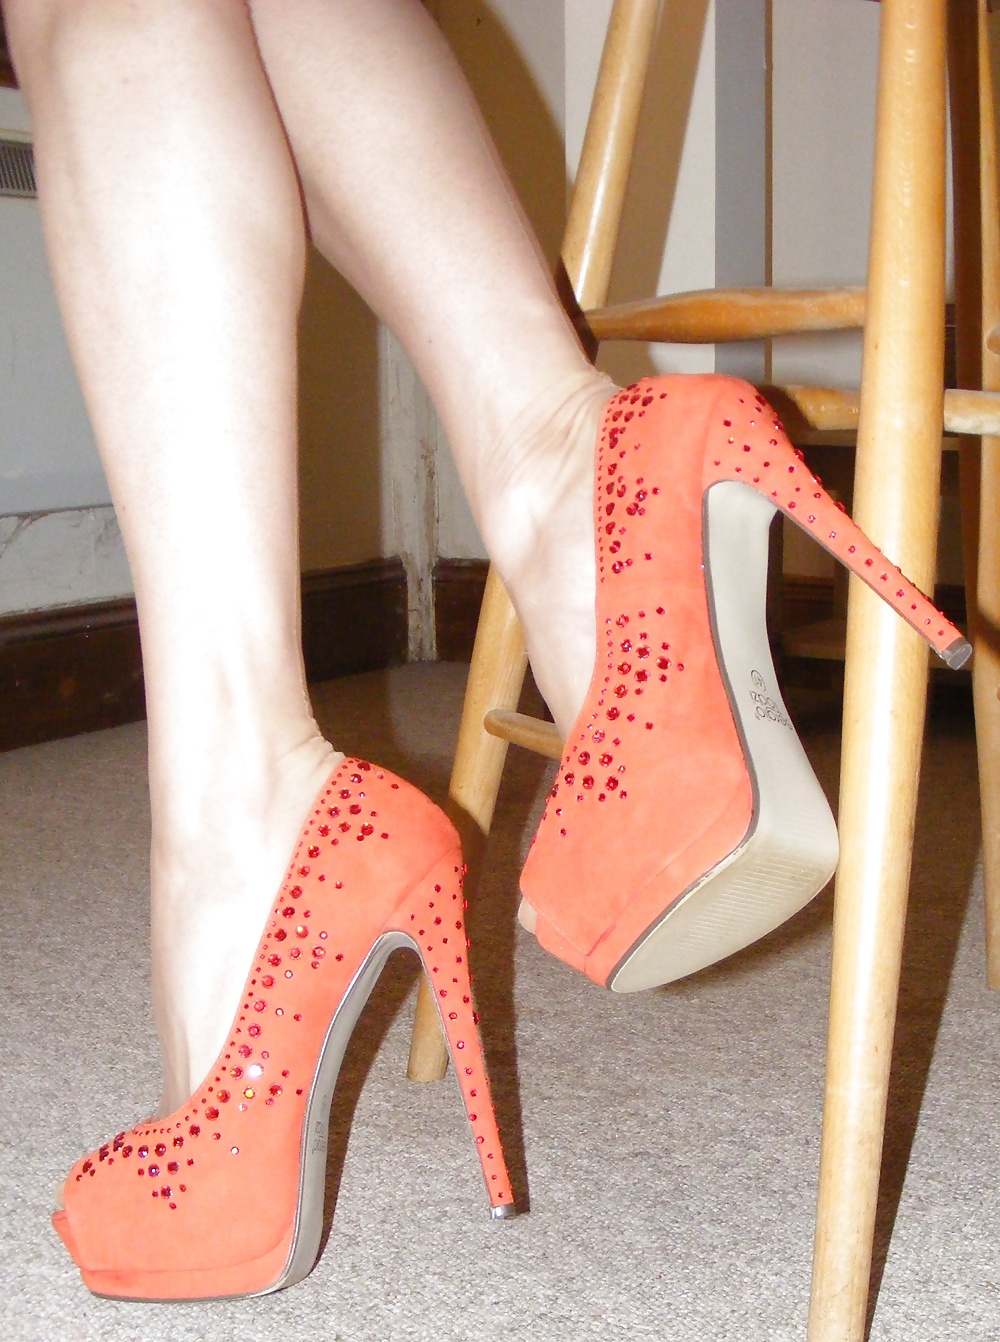 Nylon feet and heels #33305404